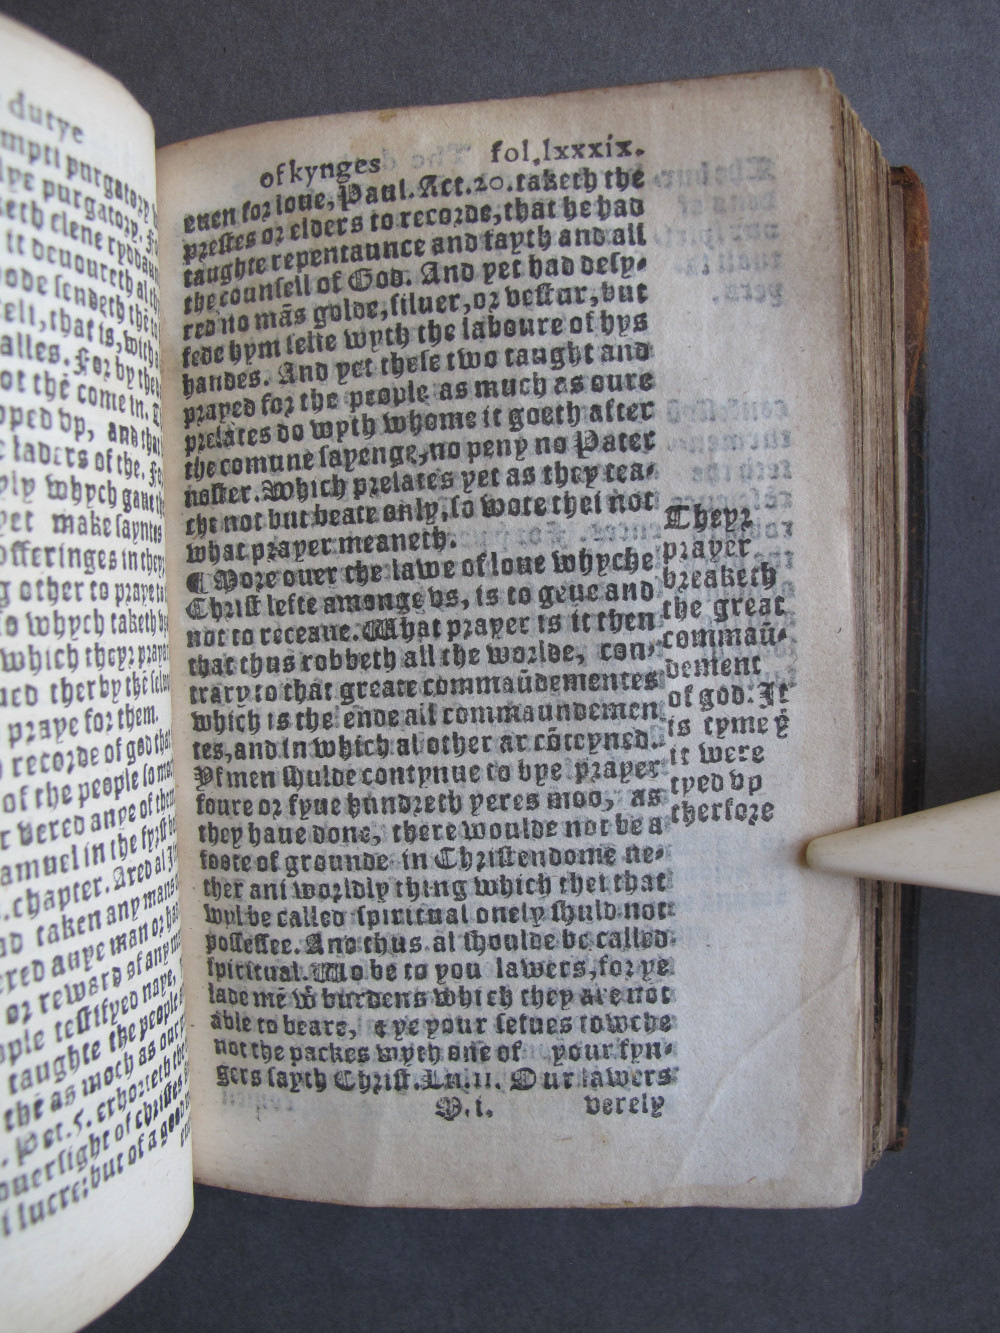 1 Folio M1 recto